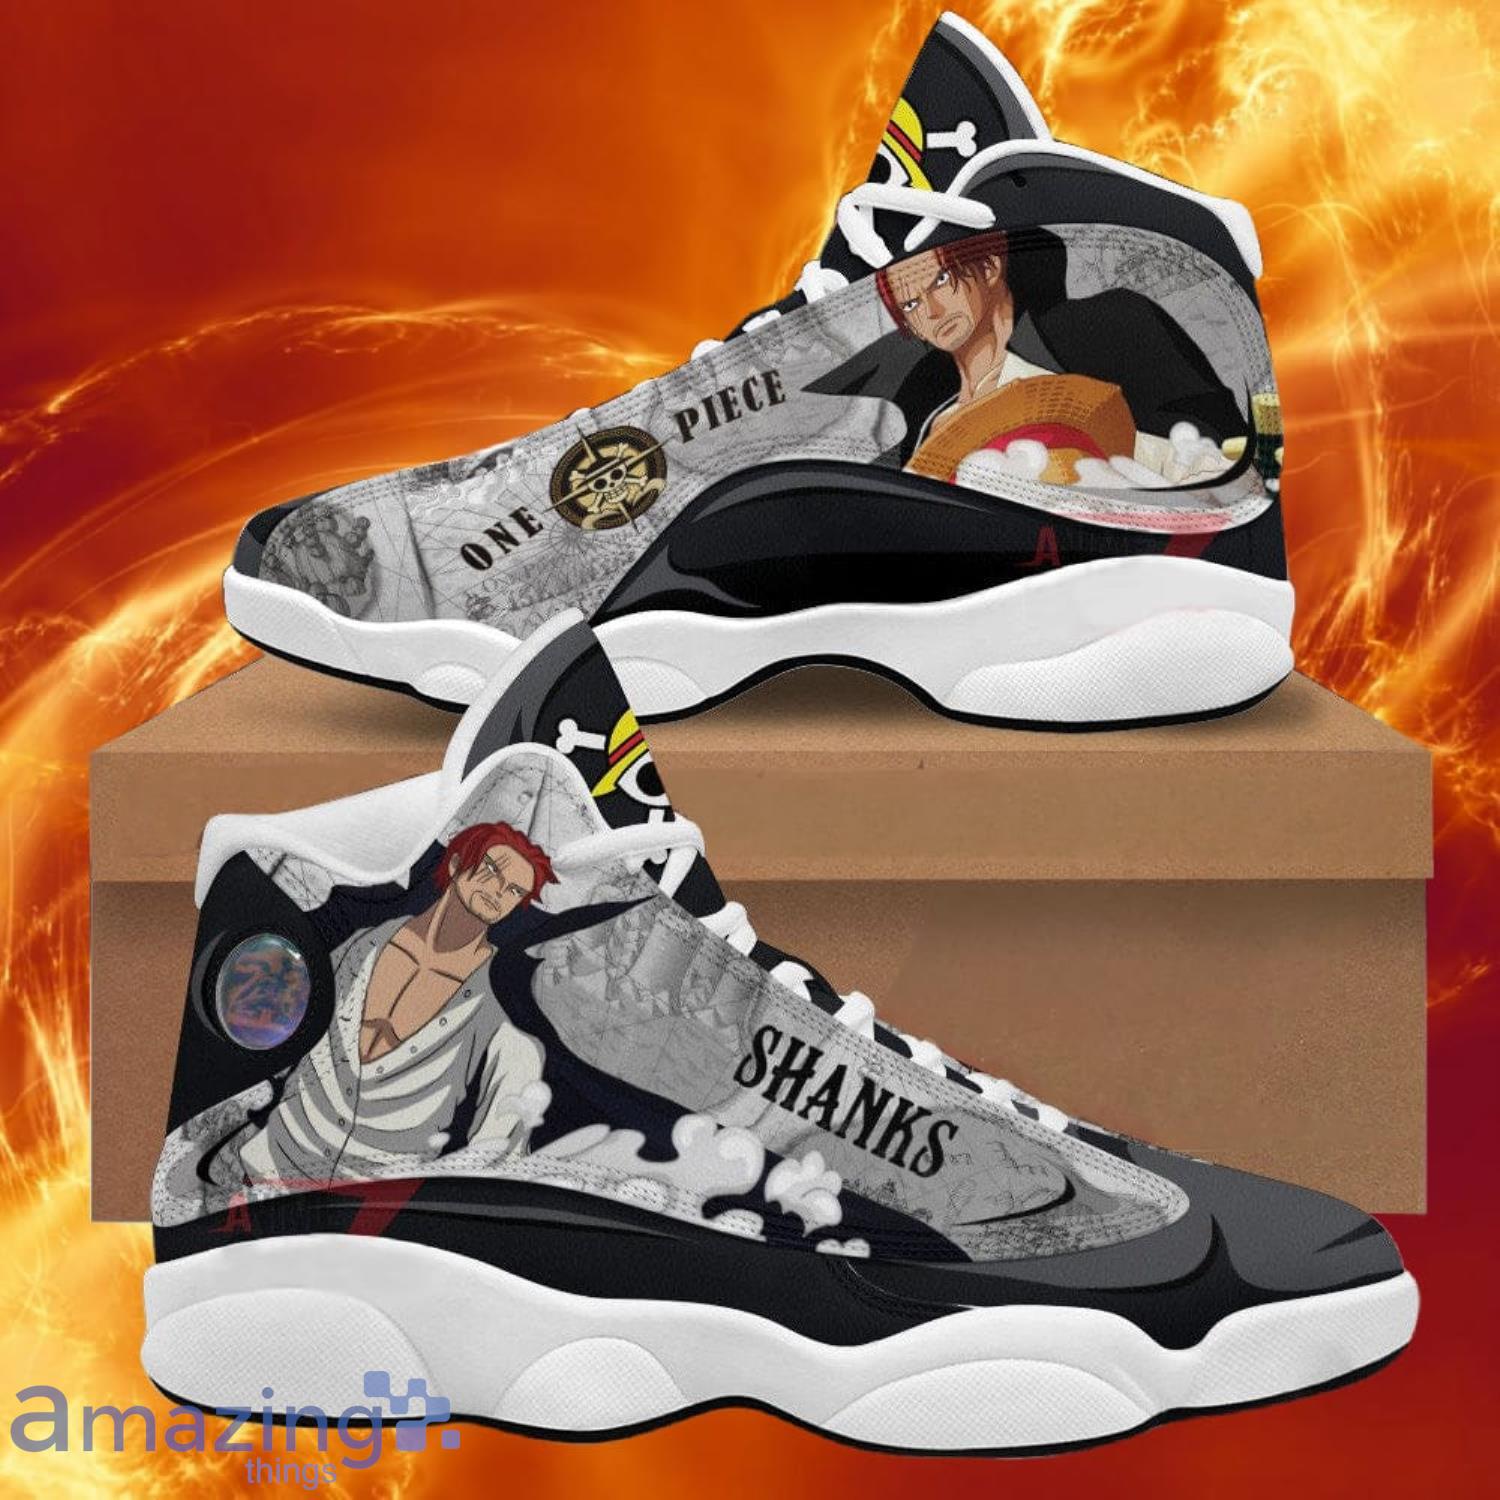 Demon Slayer Air Jd13 Sneakers Mitsuri Kanroji Air Jordan 13 Anime Shoes  Gift For Fans